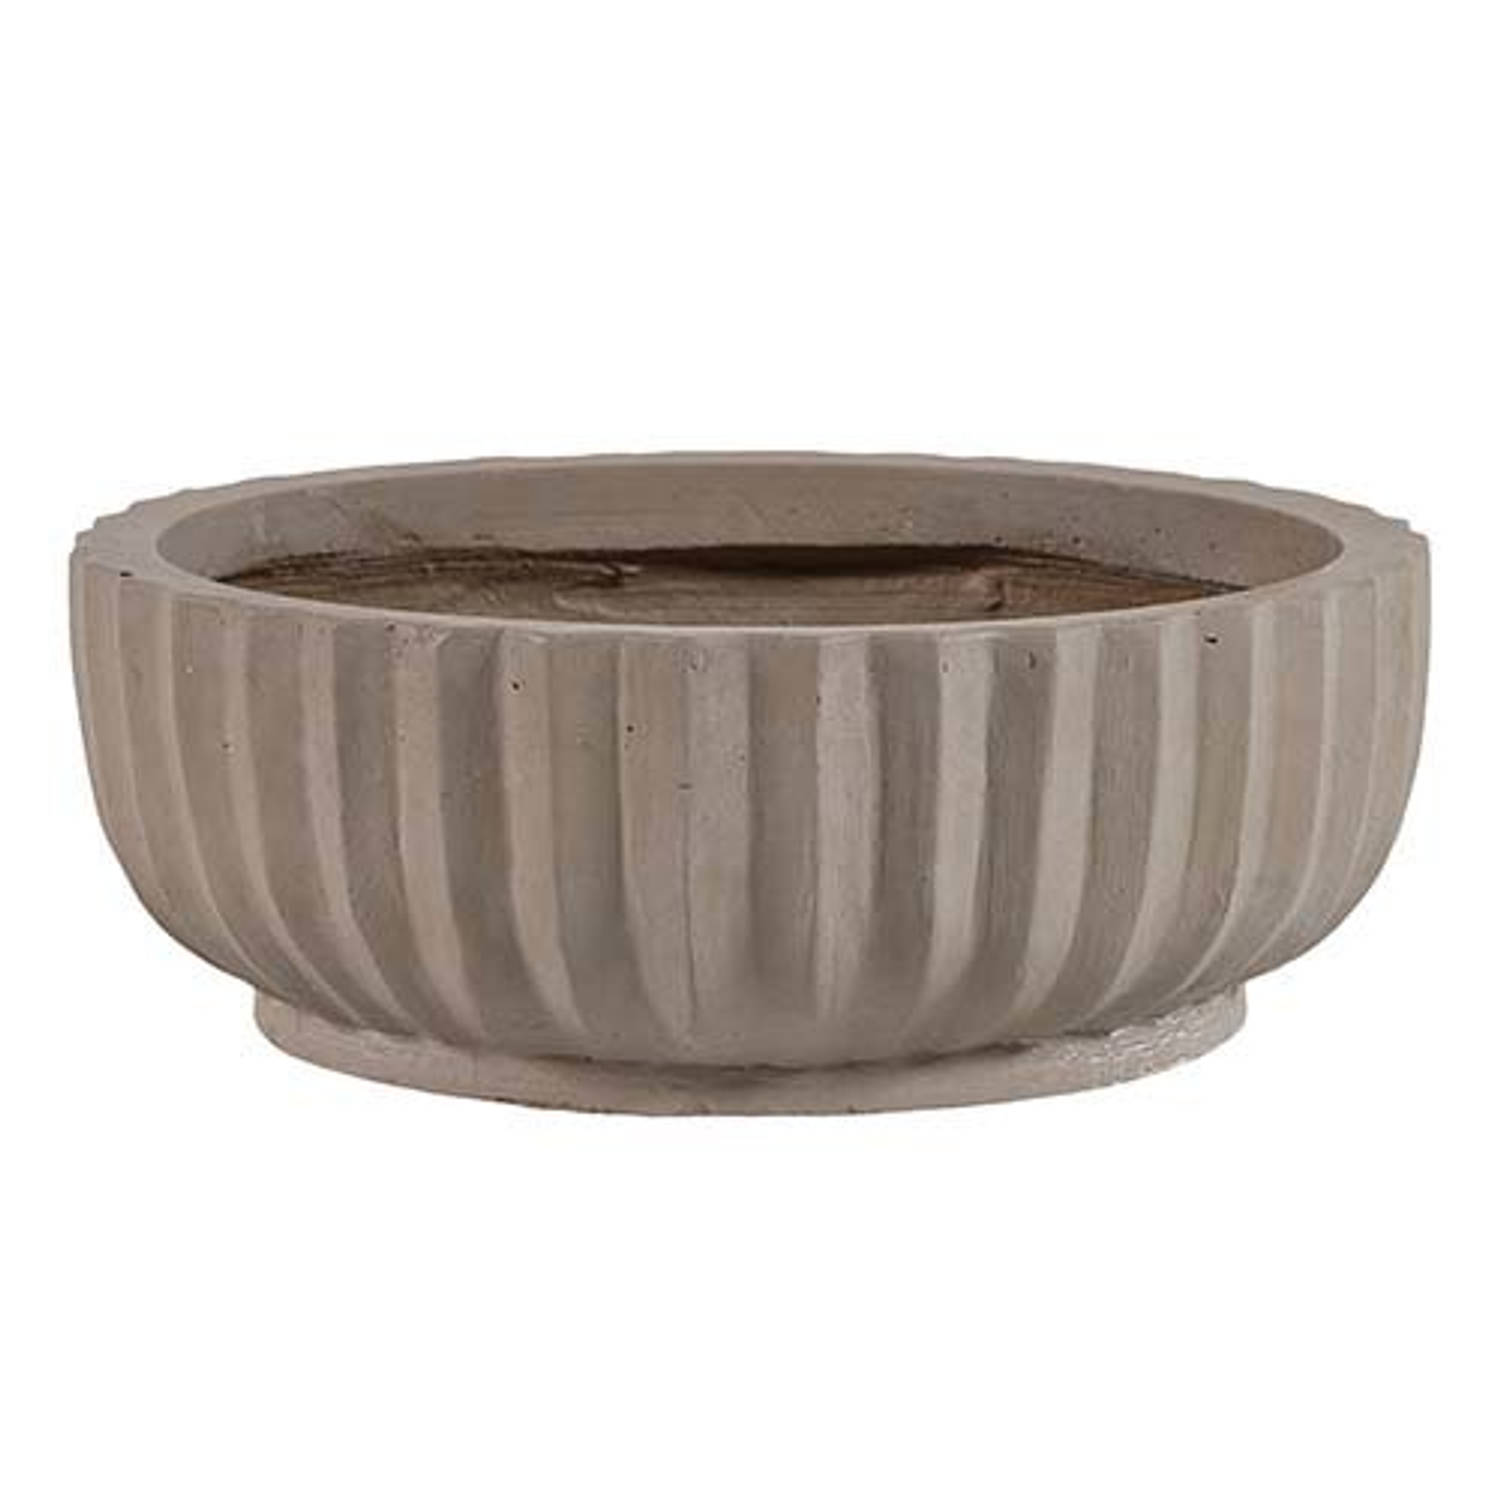 E'lite - Bloempot adelaide round bowl taupe 37x14 cm